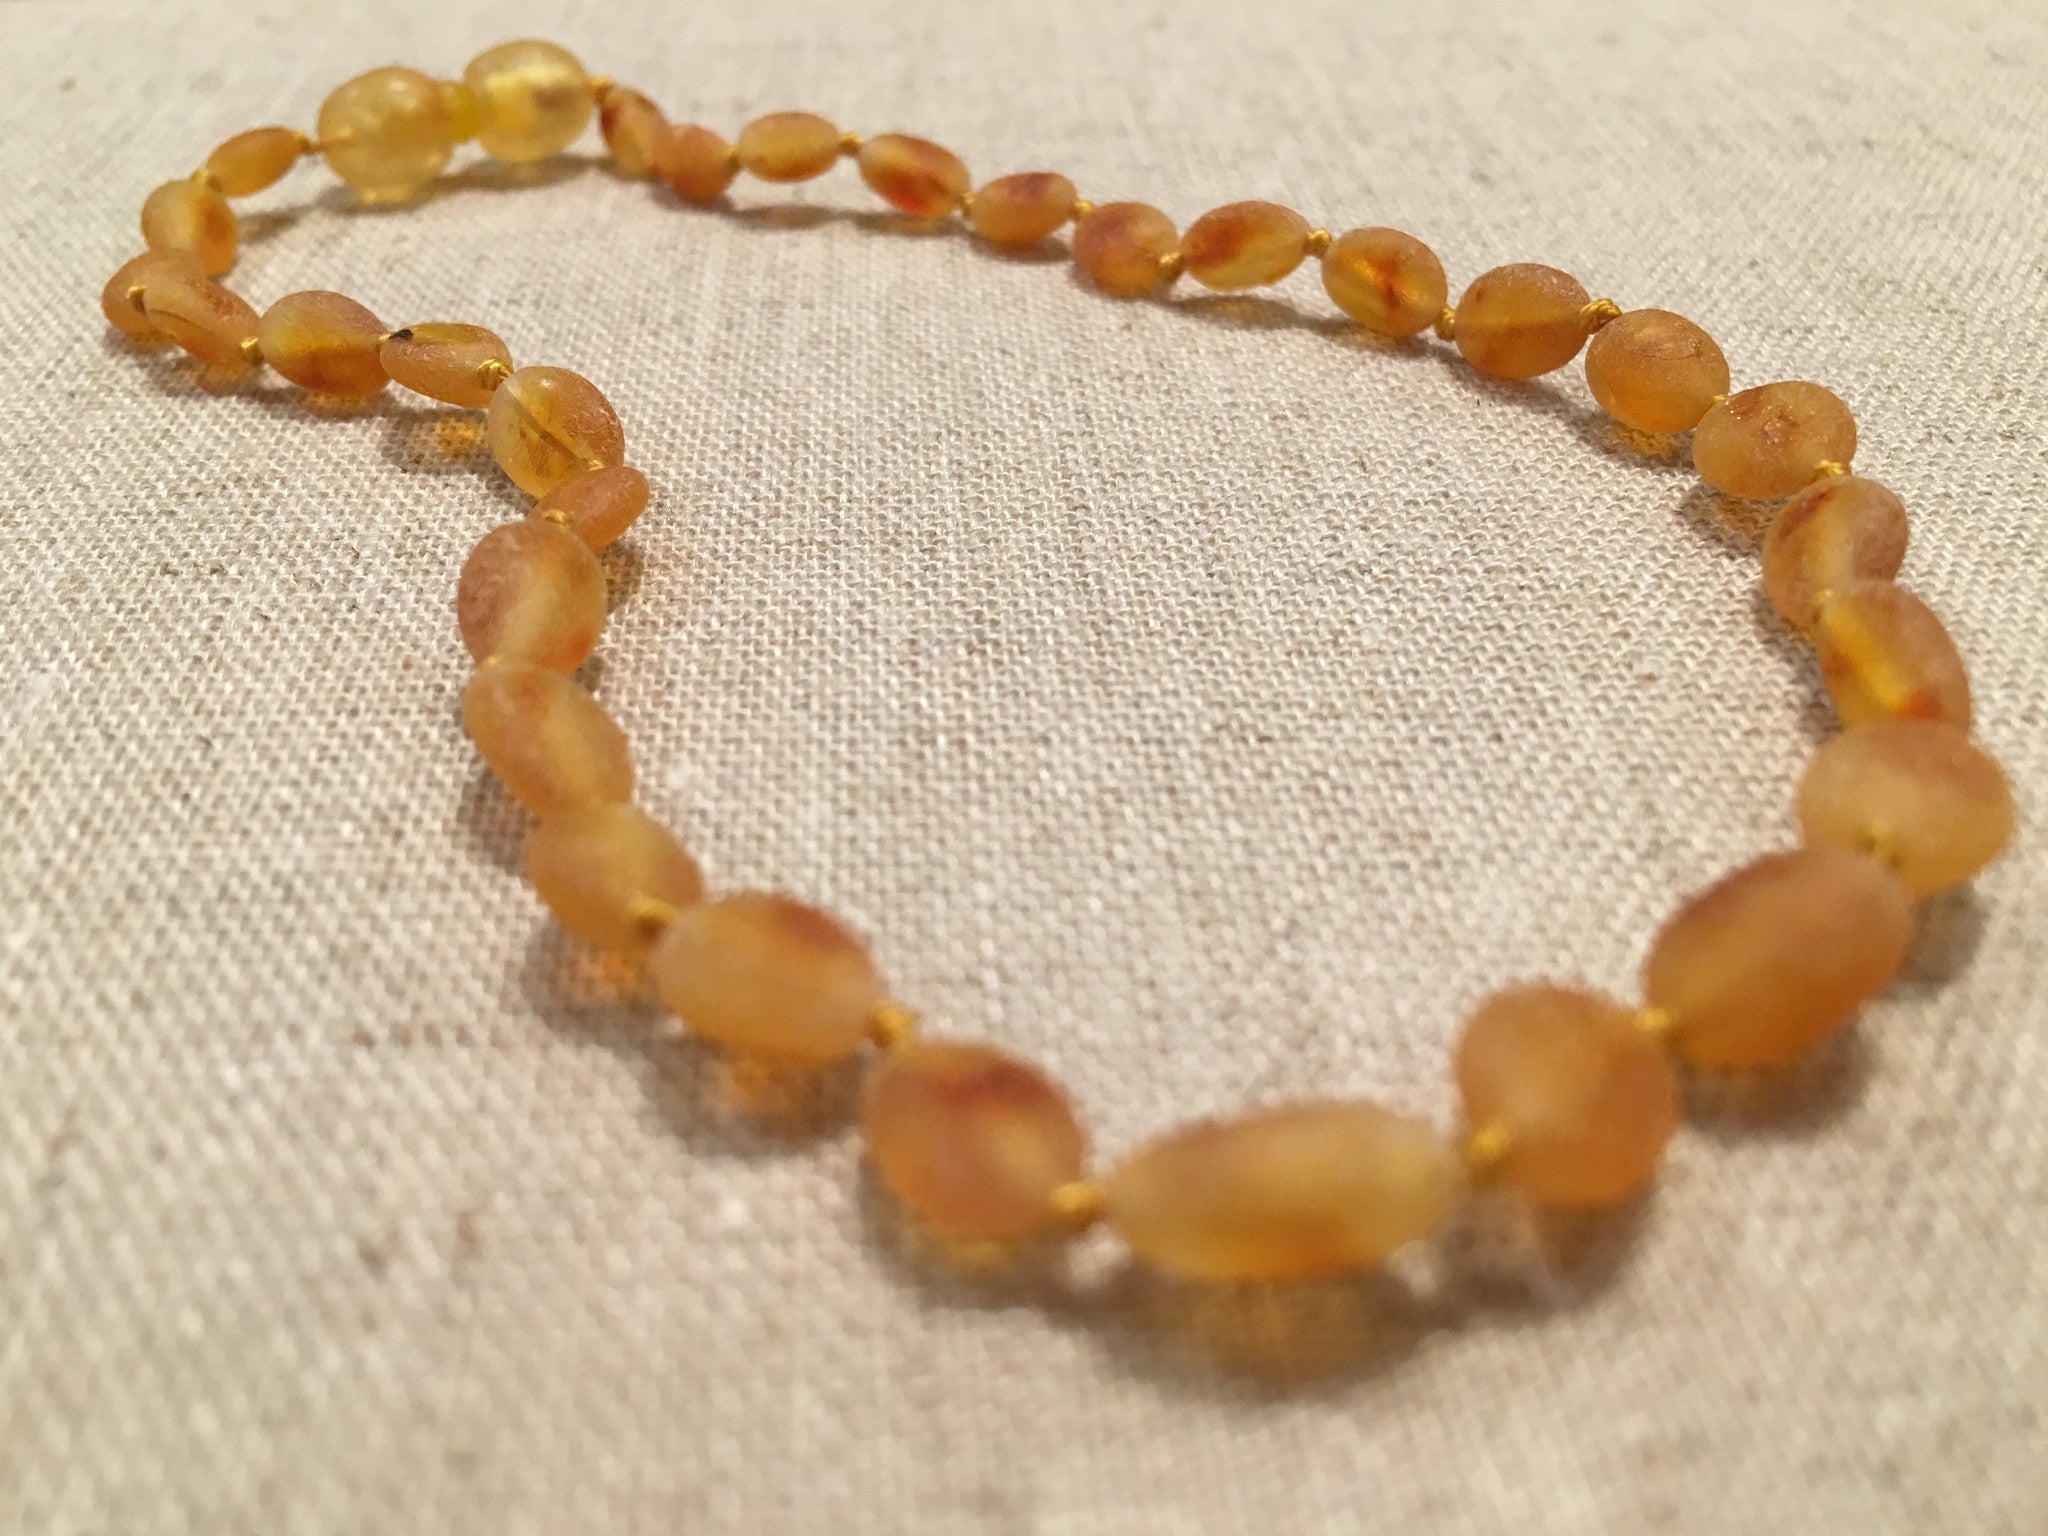 unpolished baltic amber teething necklace